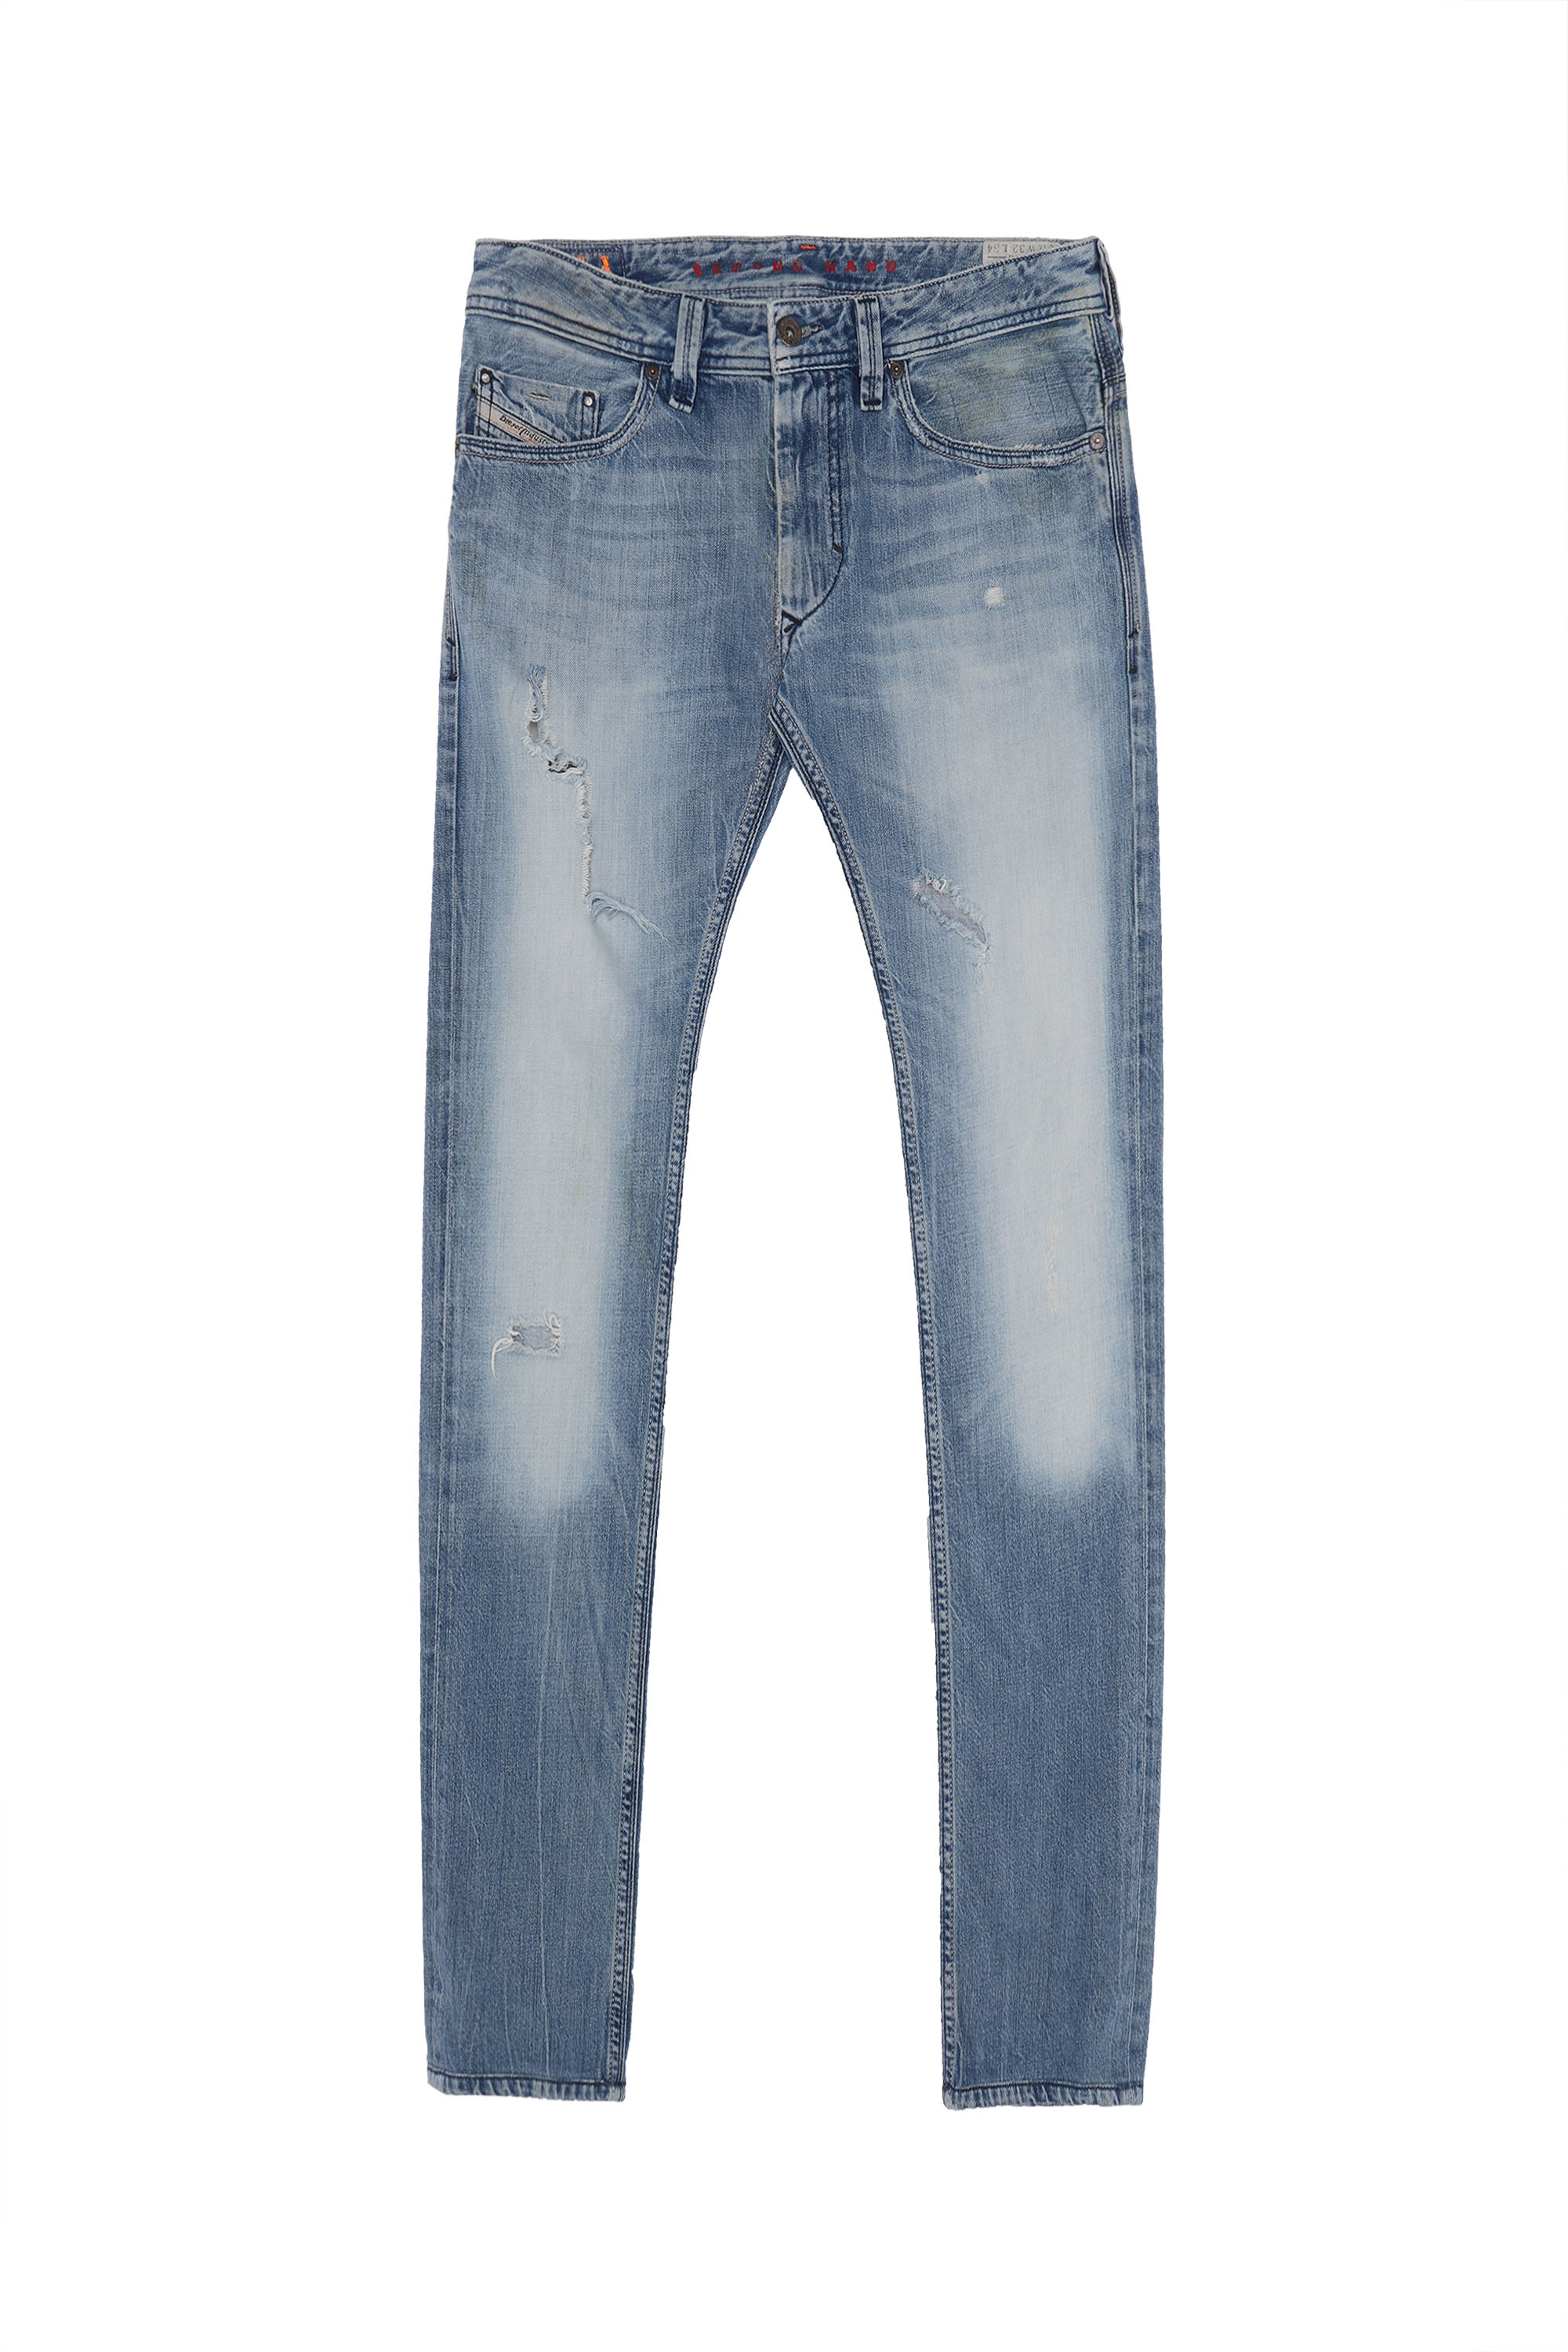 THANAZ, Light Blue - Jeans